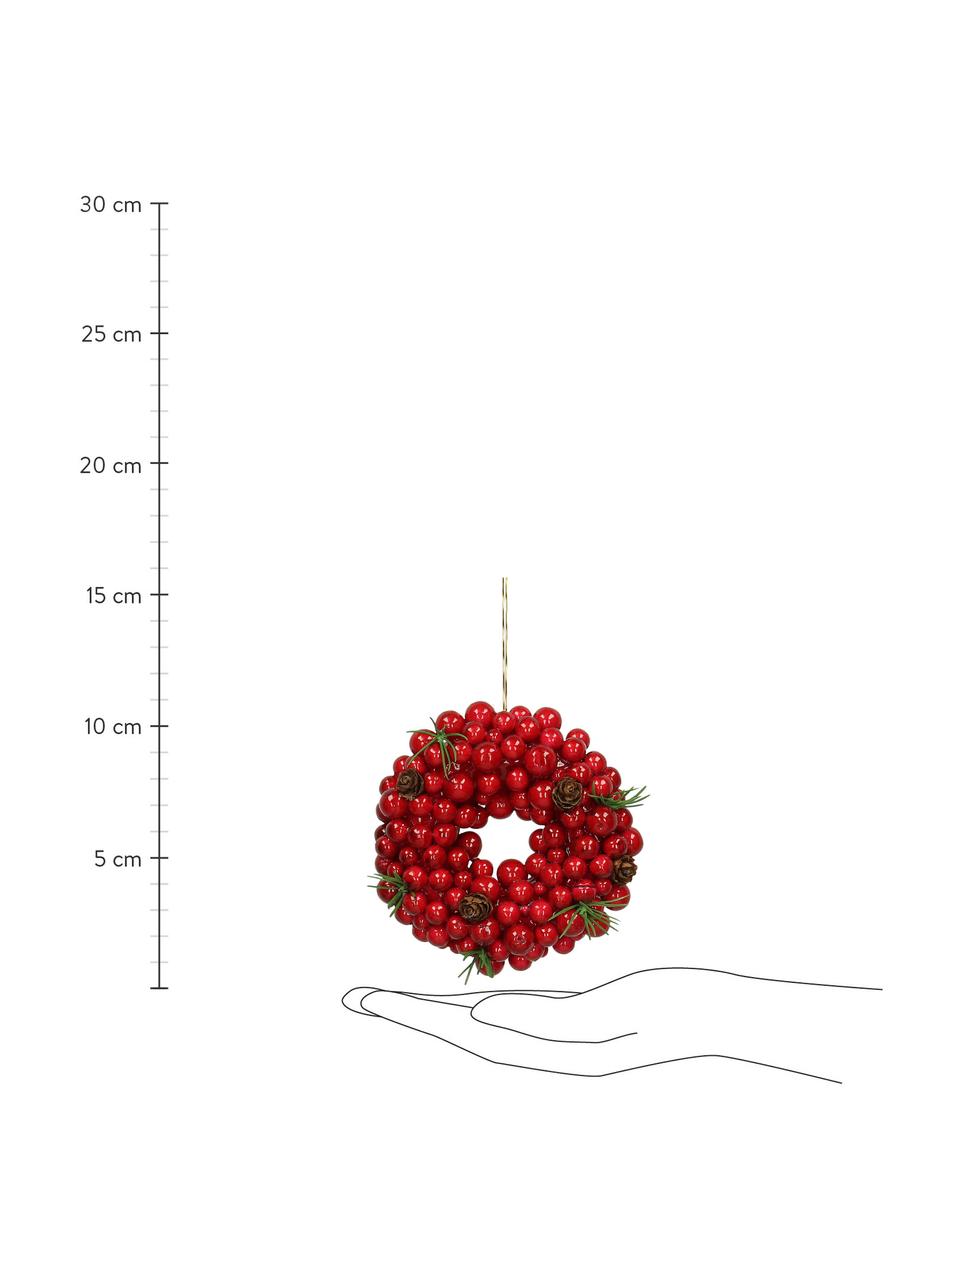 Ozdoba na stromček Wreath, 2 ks, Červená, zelená, hnedá, Ø 11 cm